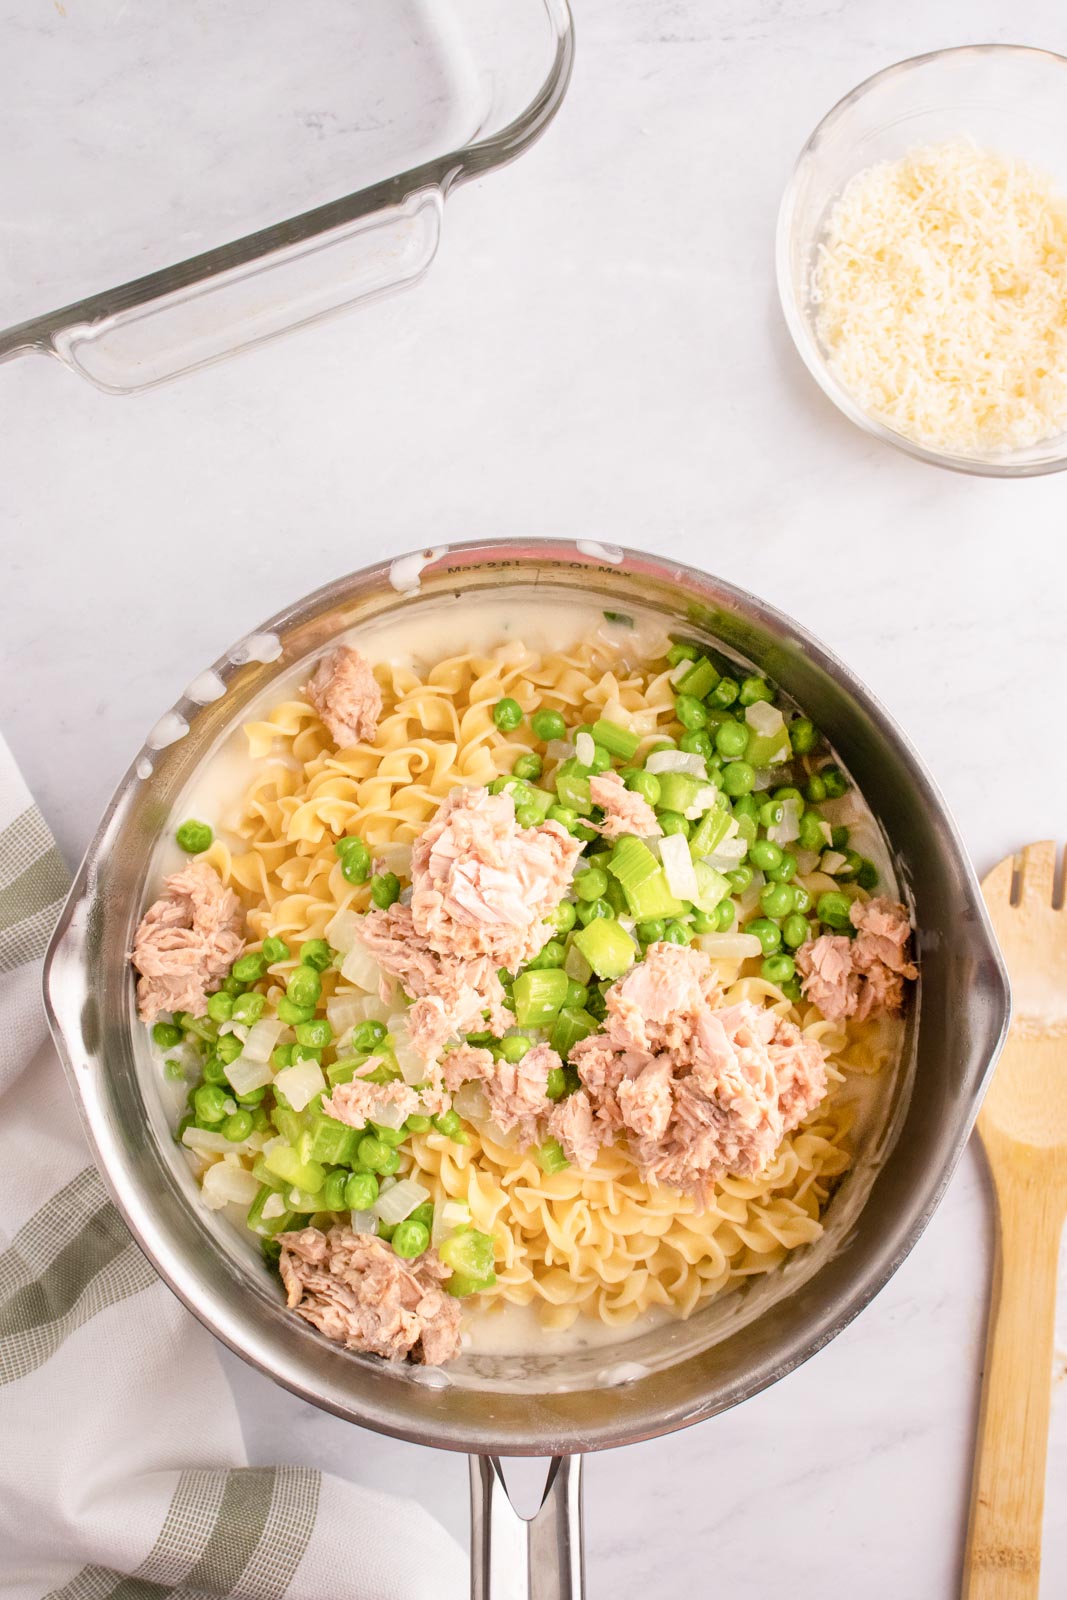 Adding tuna, egg noodles, and sauteed veggies to cream sauce for tuna noodle casserole.